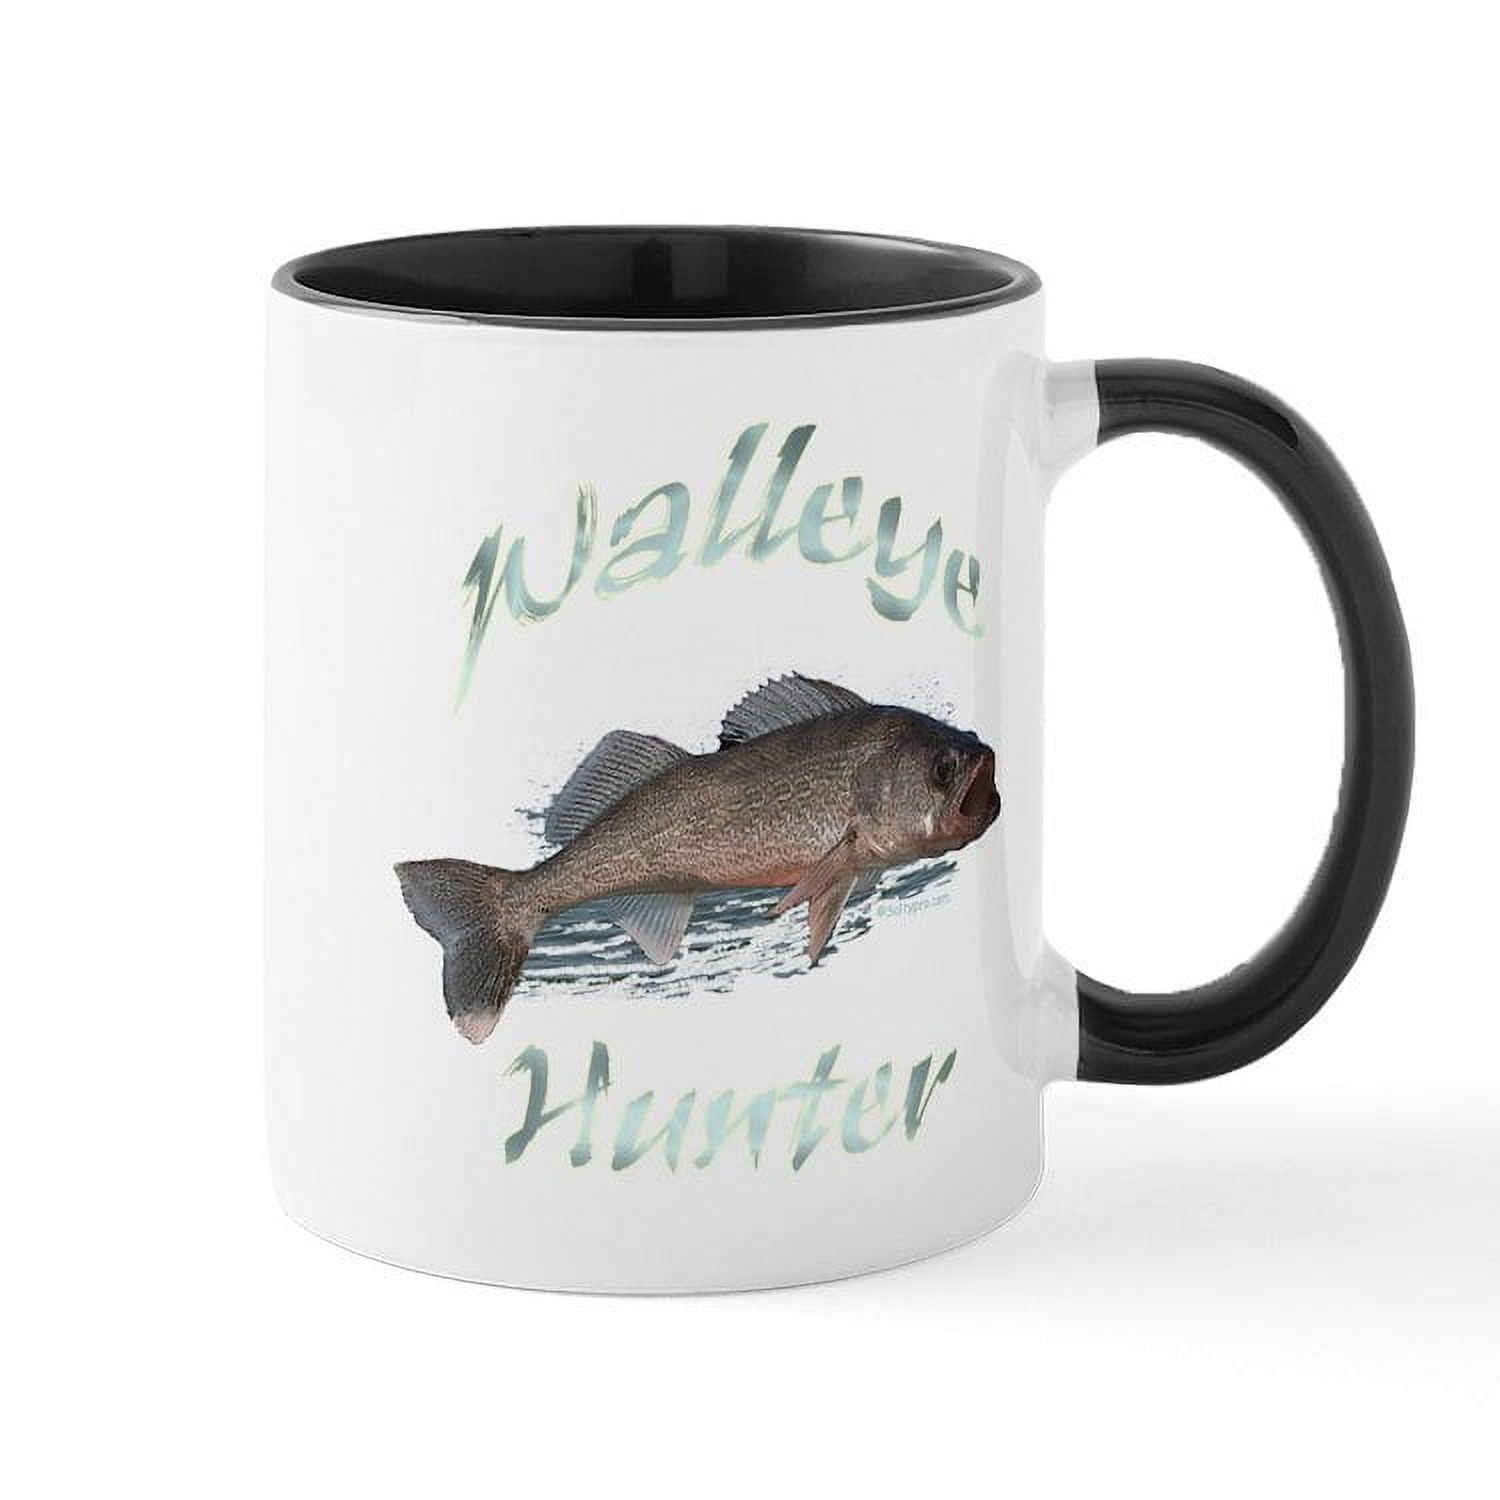 CafePress - Walleye Hunter Mug - 11 oz Ceramic Mug - Novelty Coffee Tea Cup  